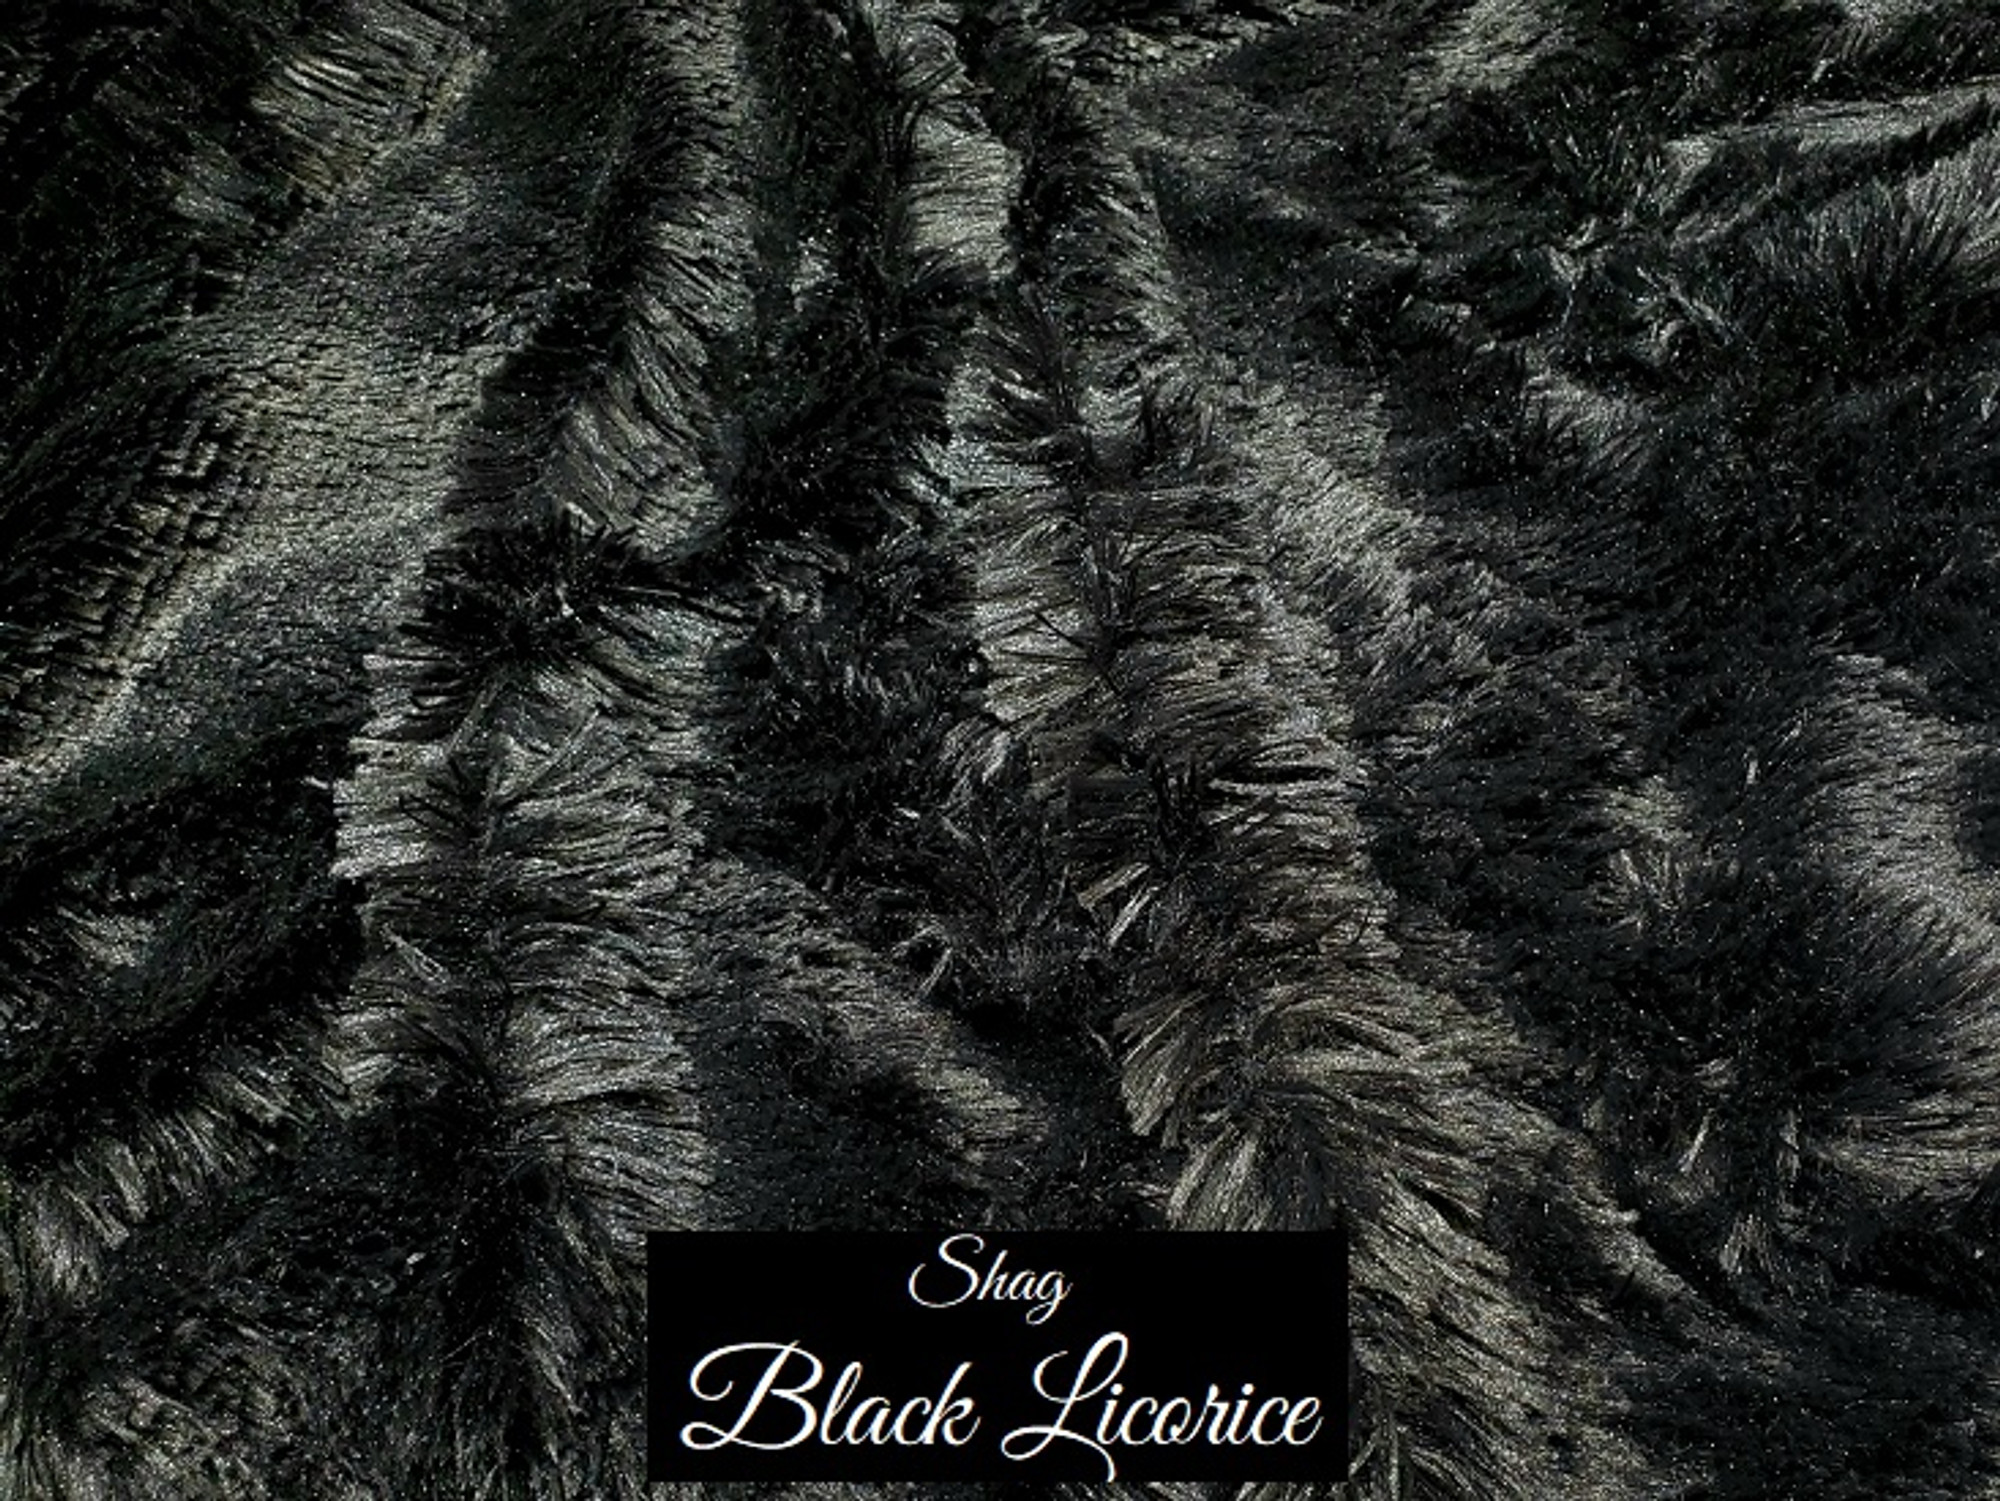 Black Faux Fur Fabric